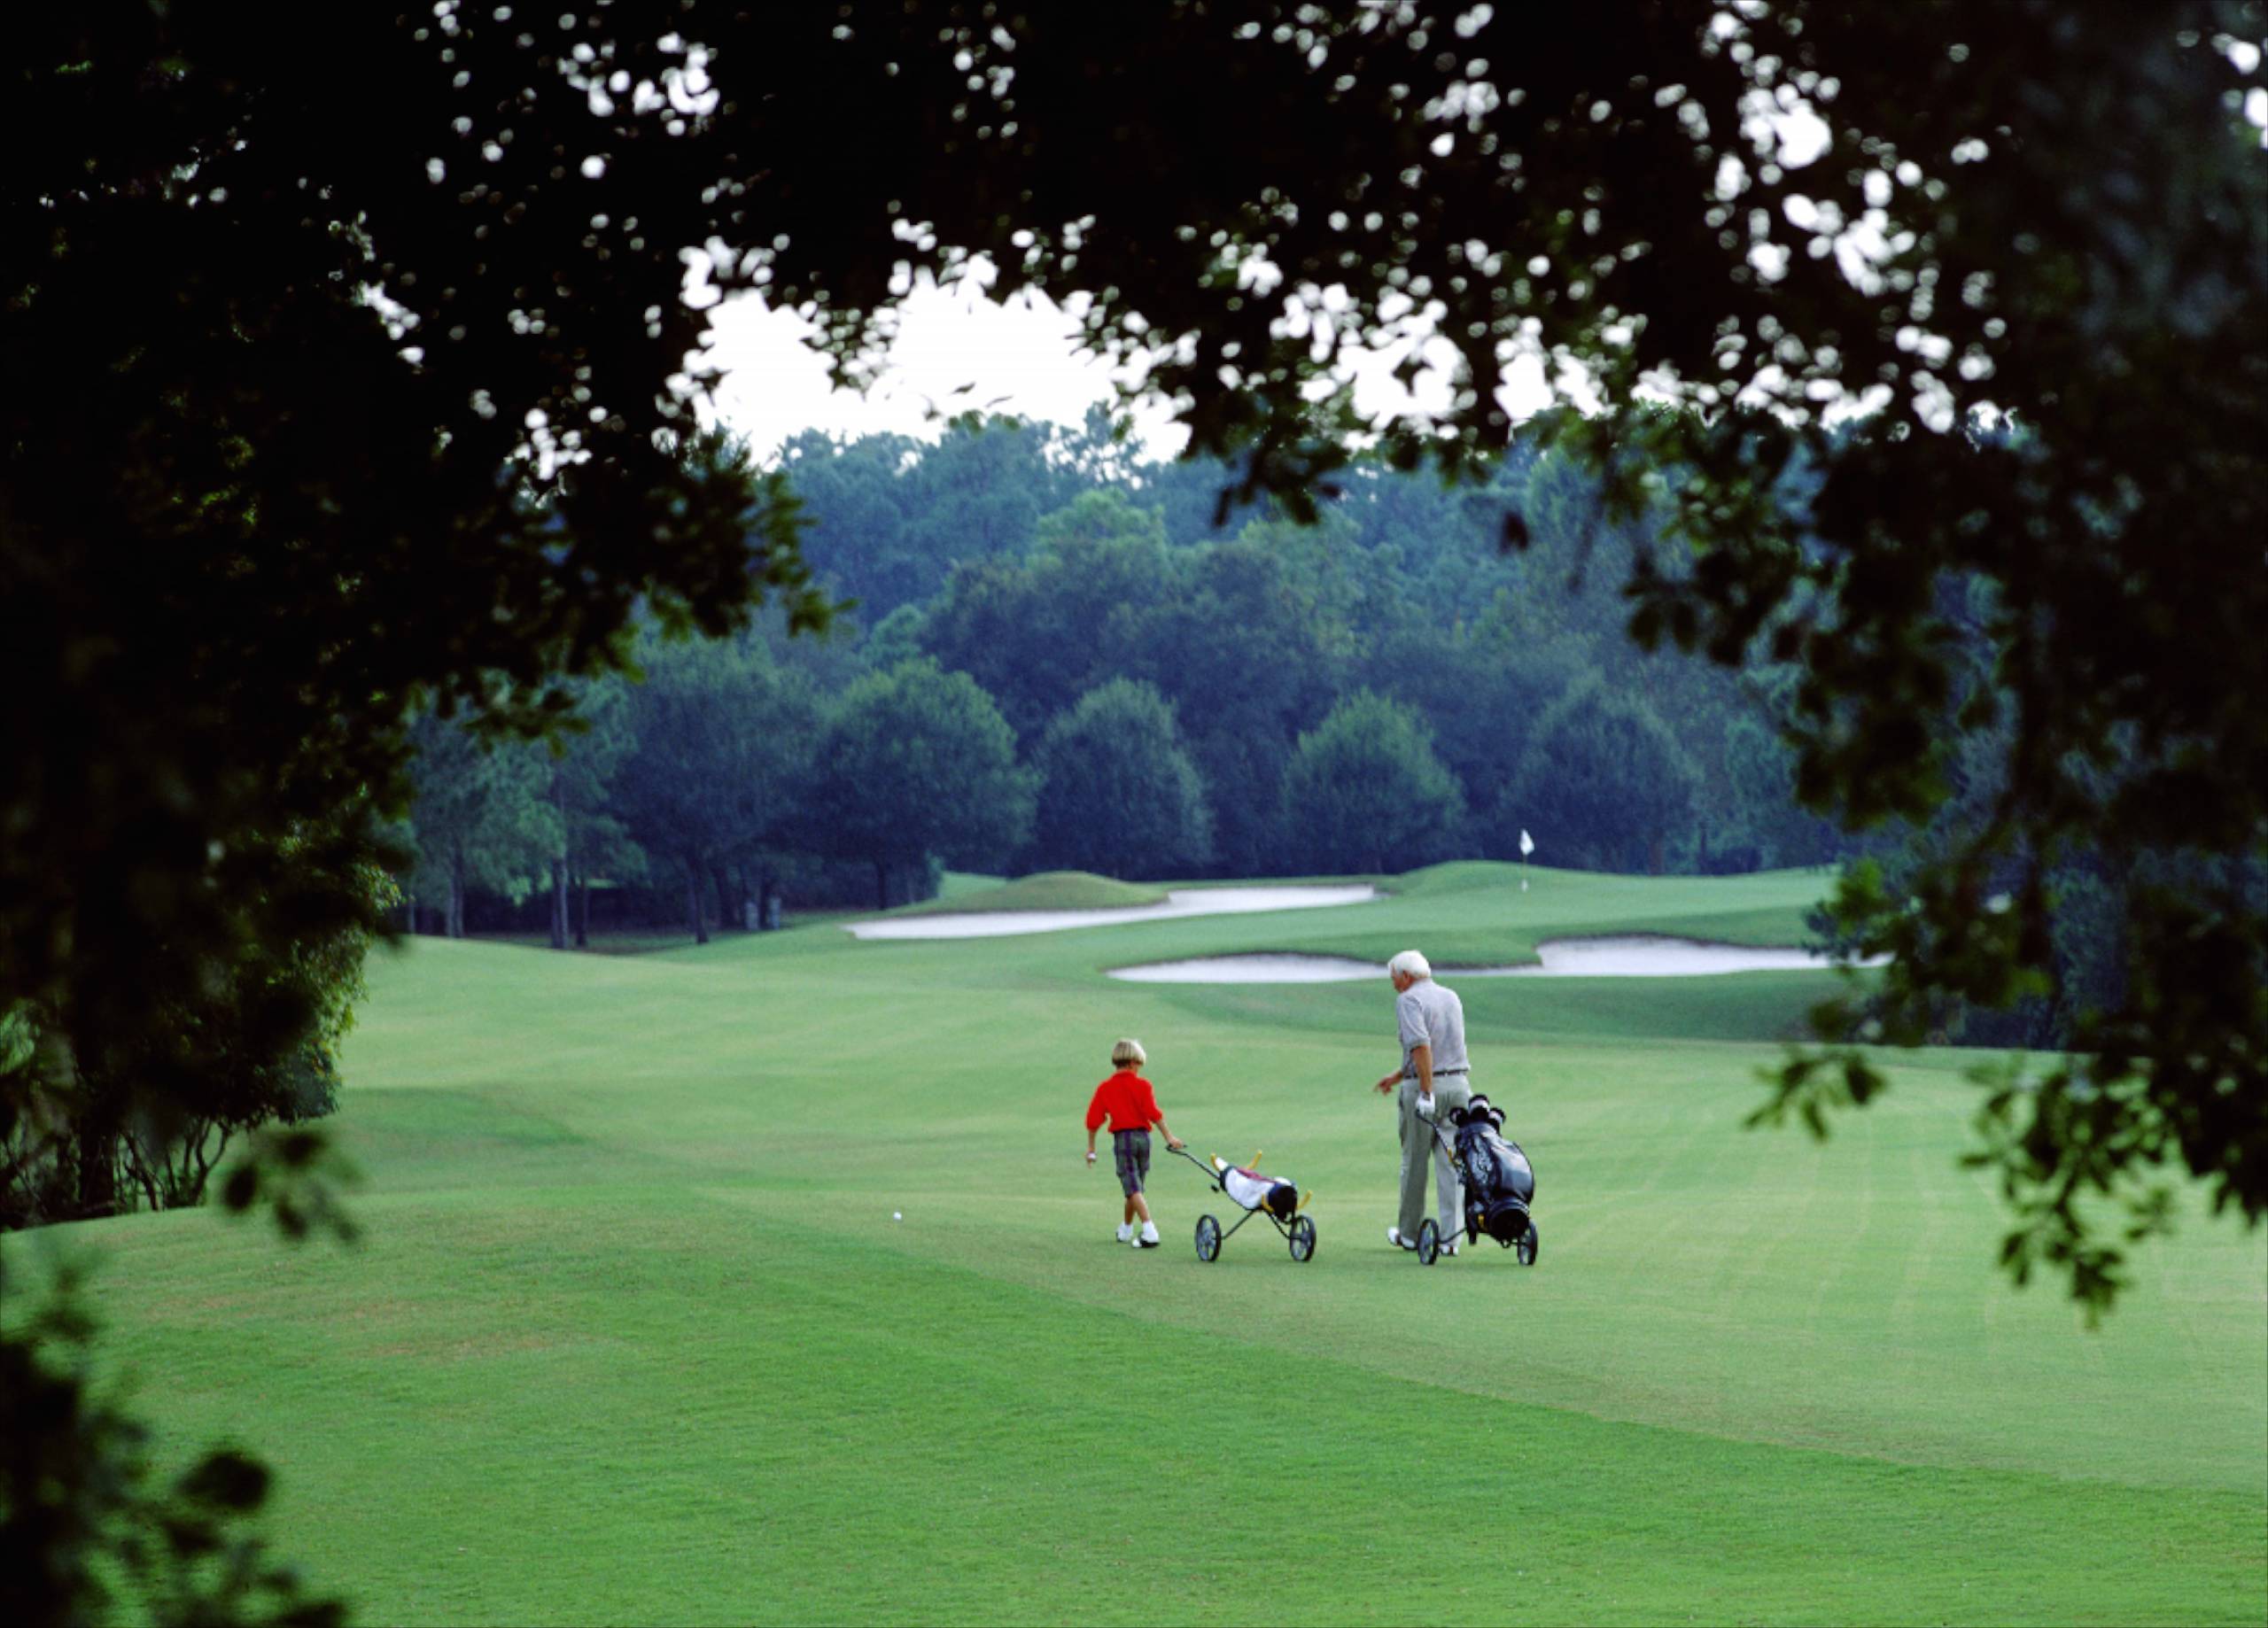 Golf courses remain open for business at Walt Disney World during coronavirus shutdown